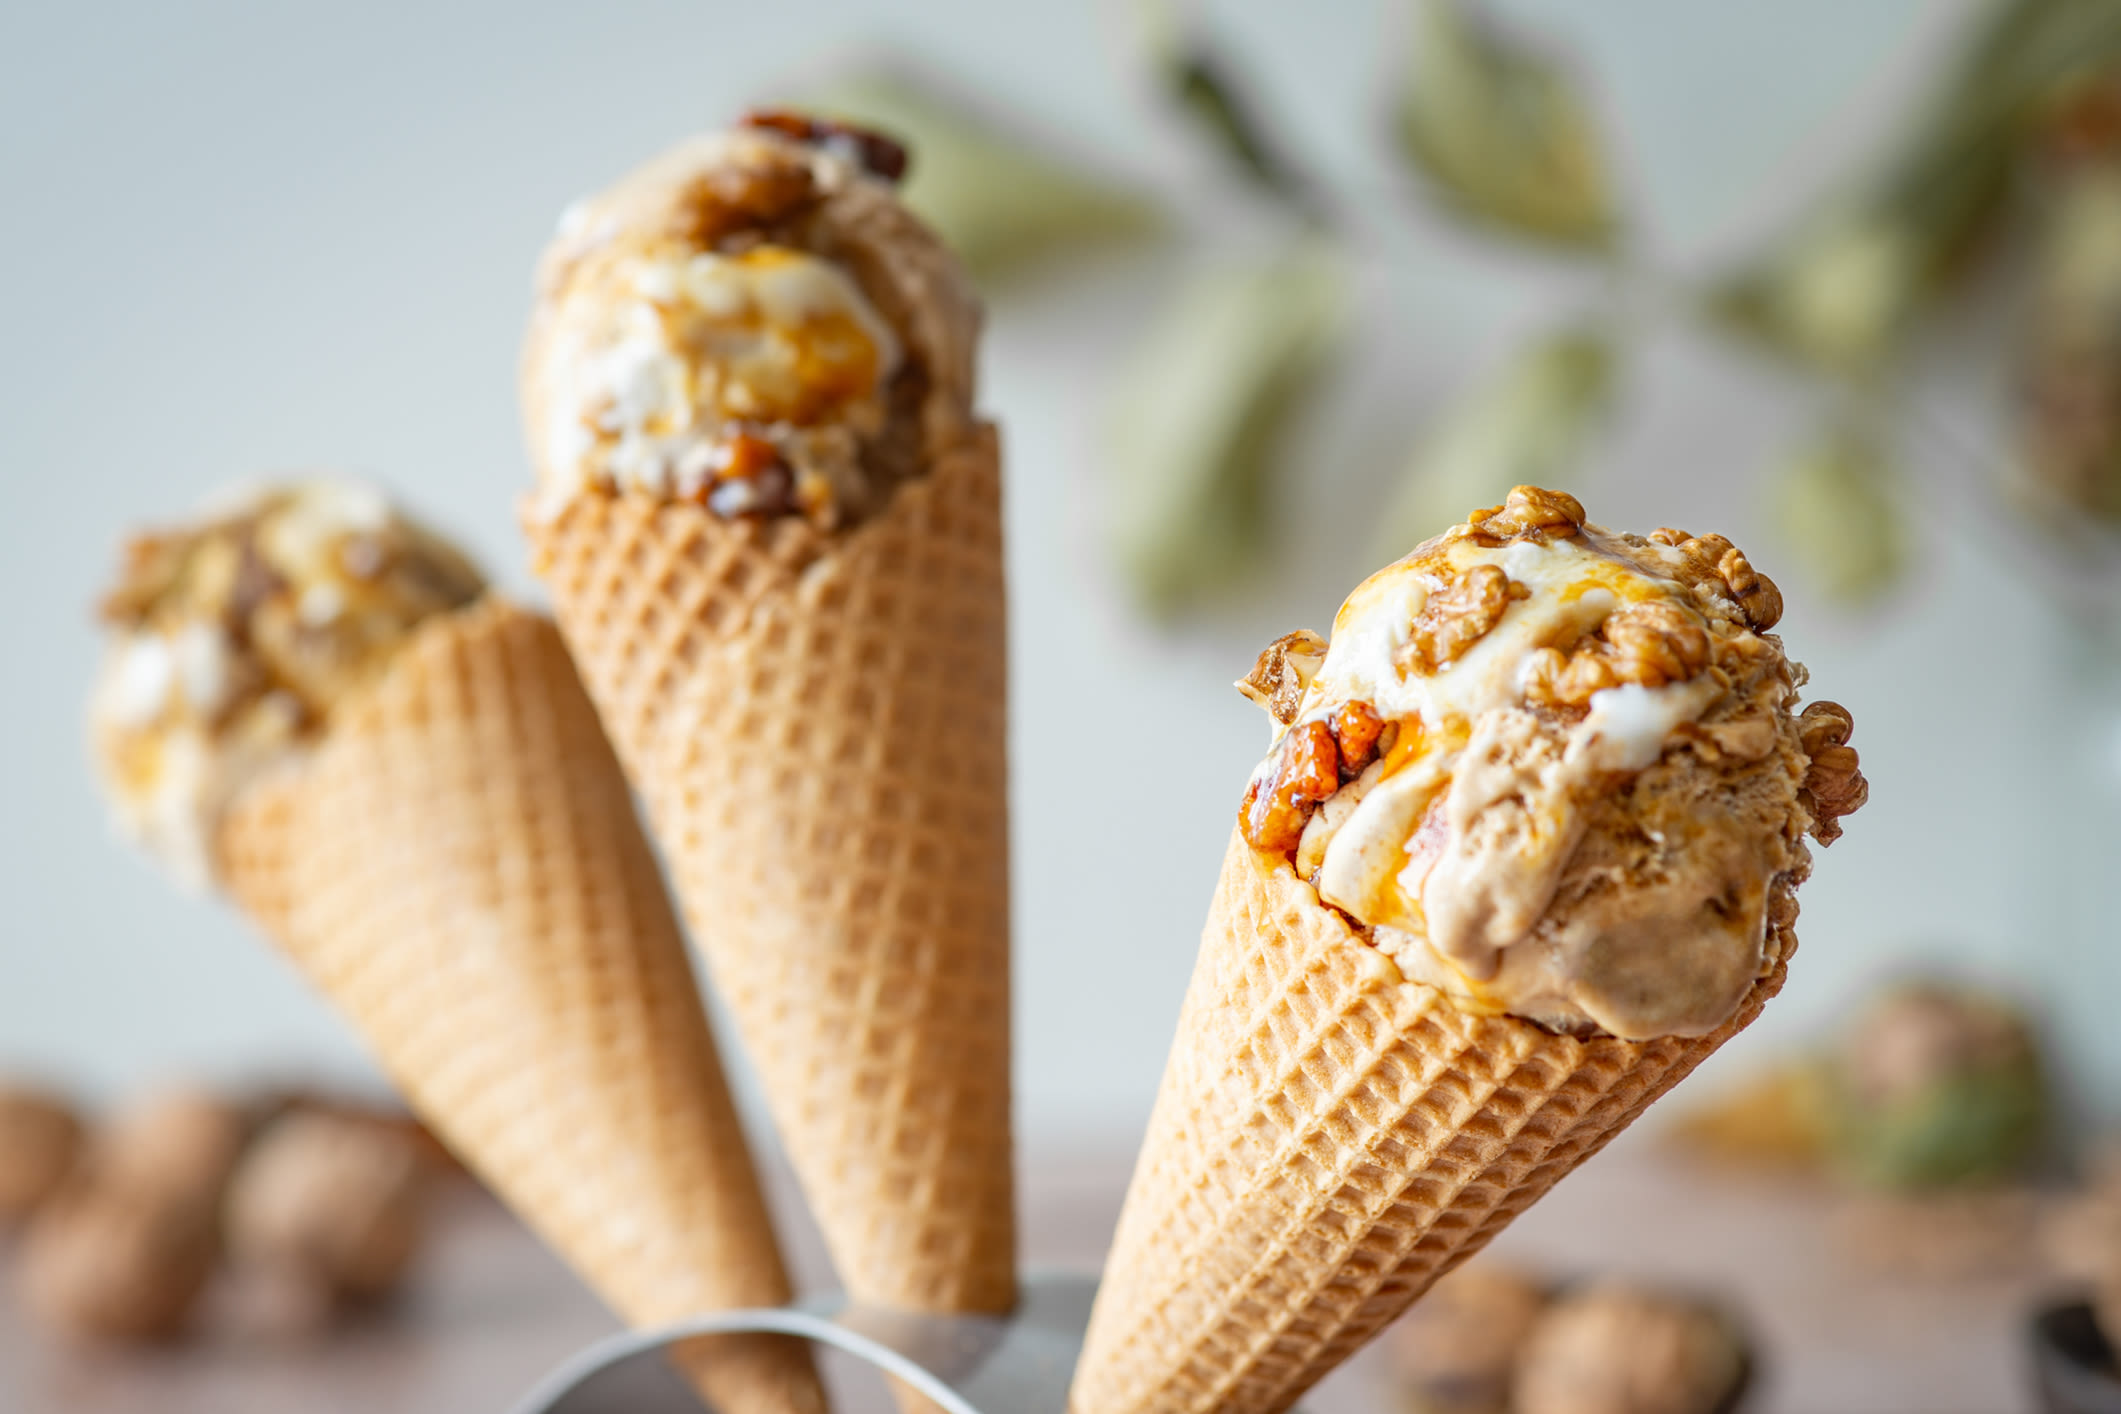 Vegan ice cream recall as warning issued to customers